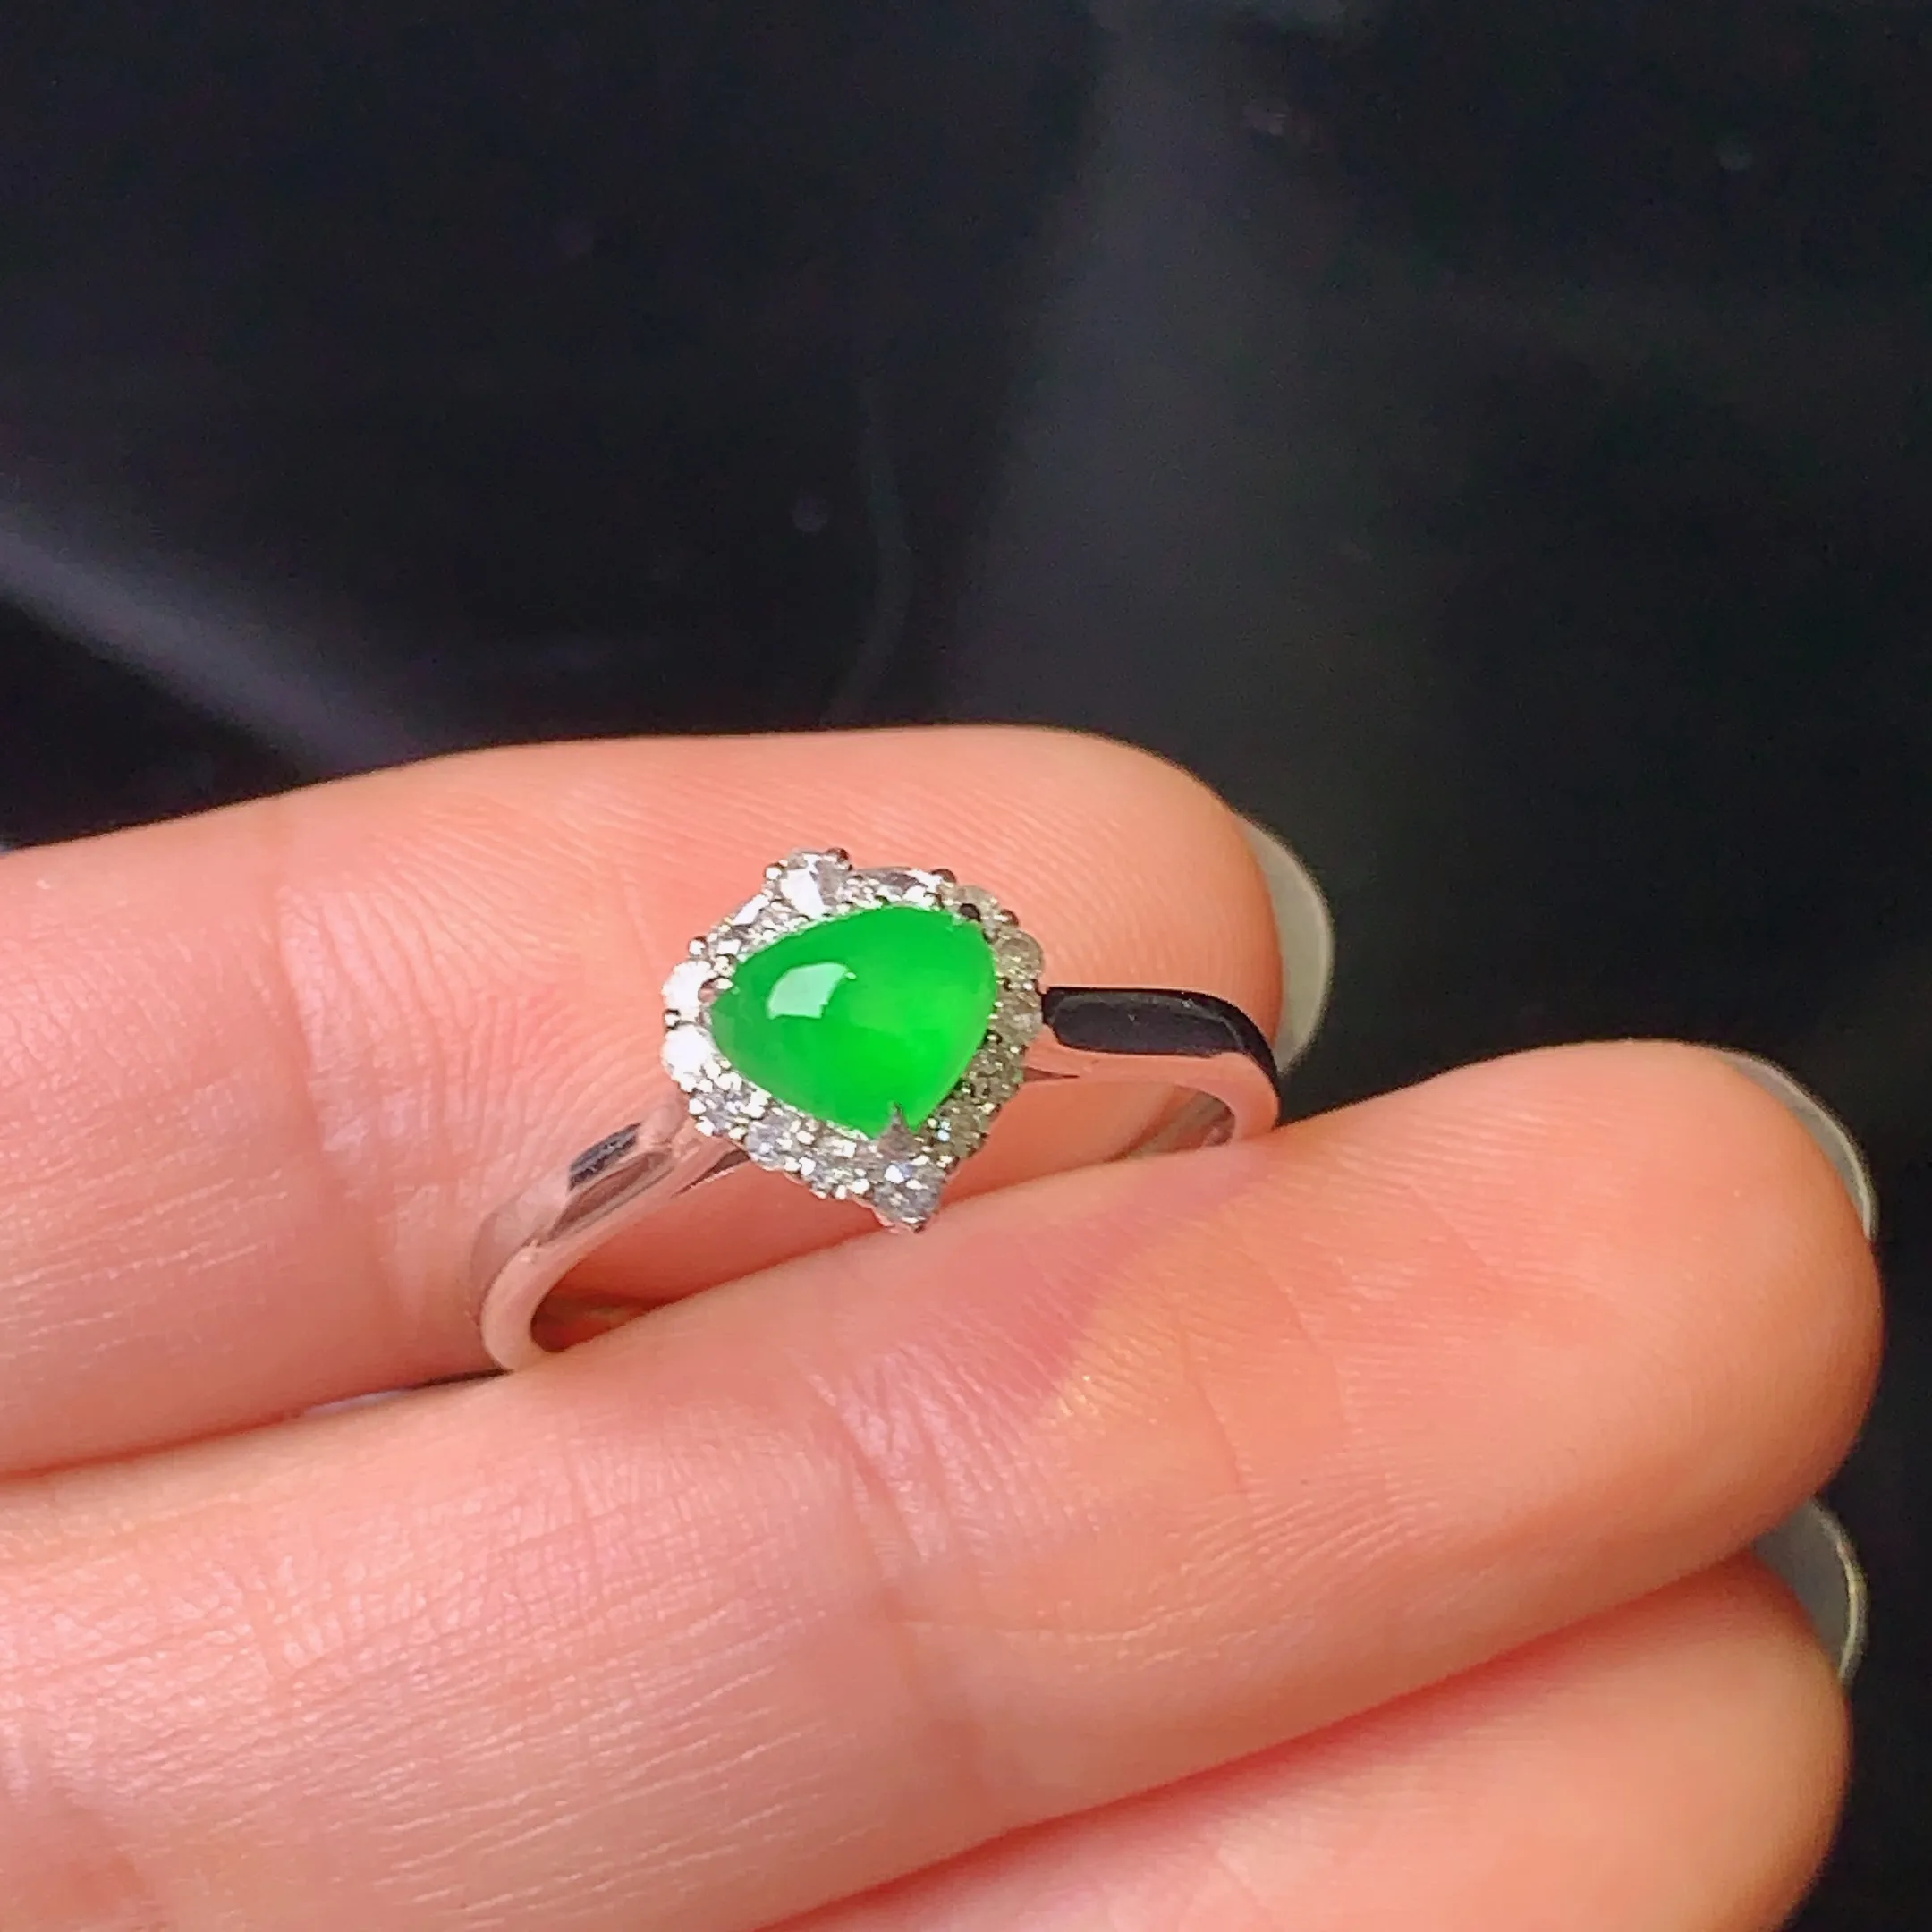 18k金钻镶嵌满绿心形戒指 玉质细腻 色泽艳丽 圈口14 整体尺寸8.6*8.2*6.7